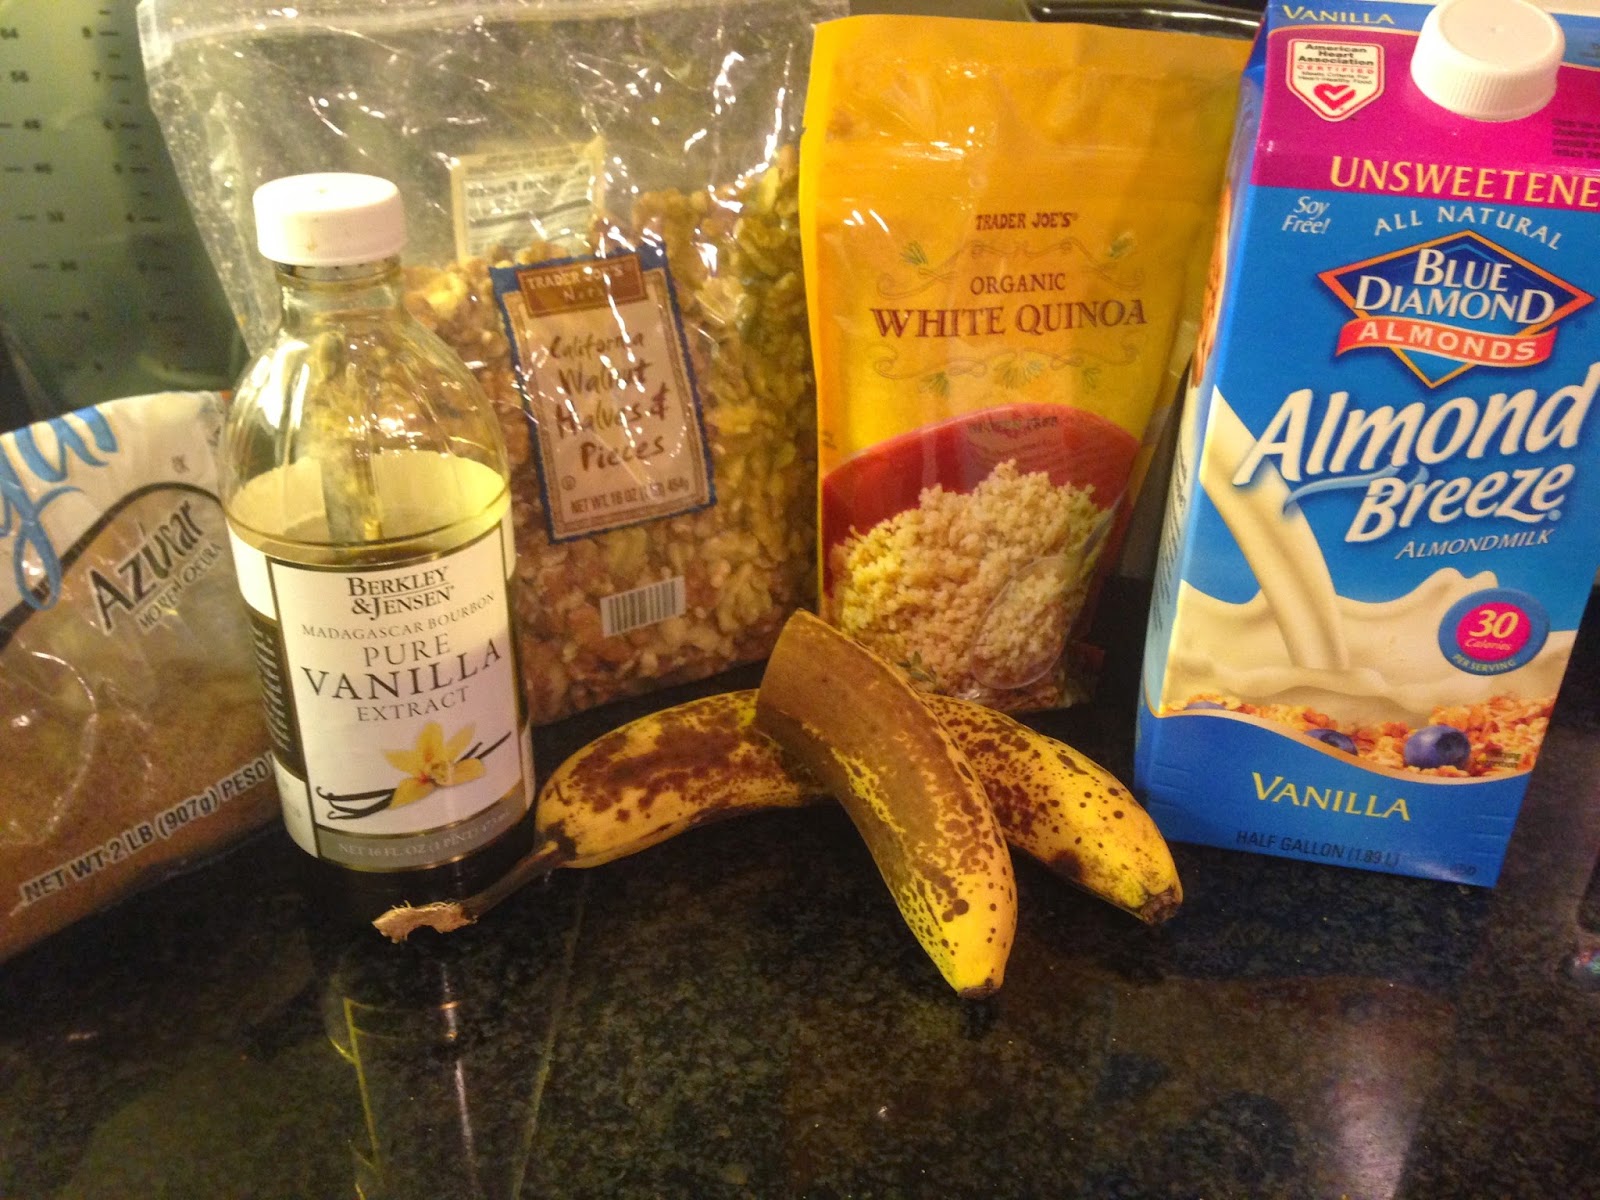 CROCKPOT CHALLENGE DAY 4: Banana bread quinoa